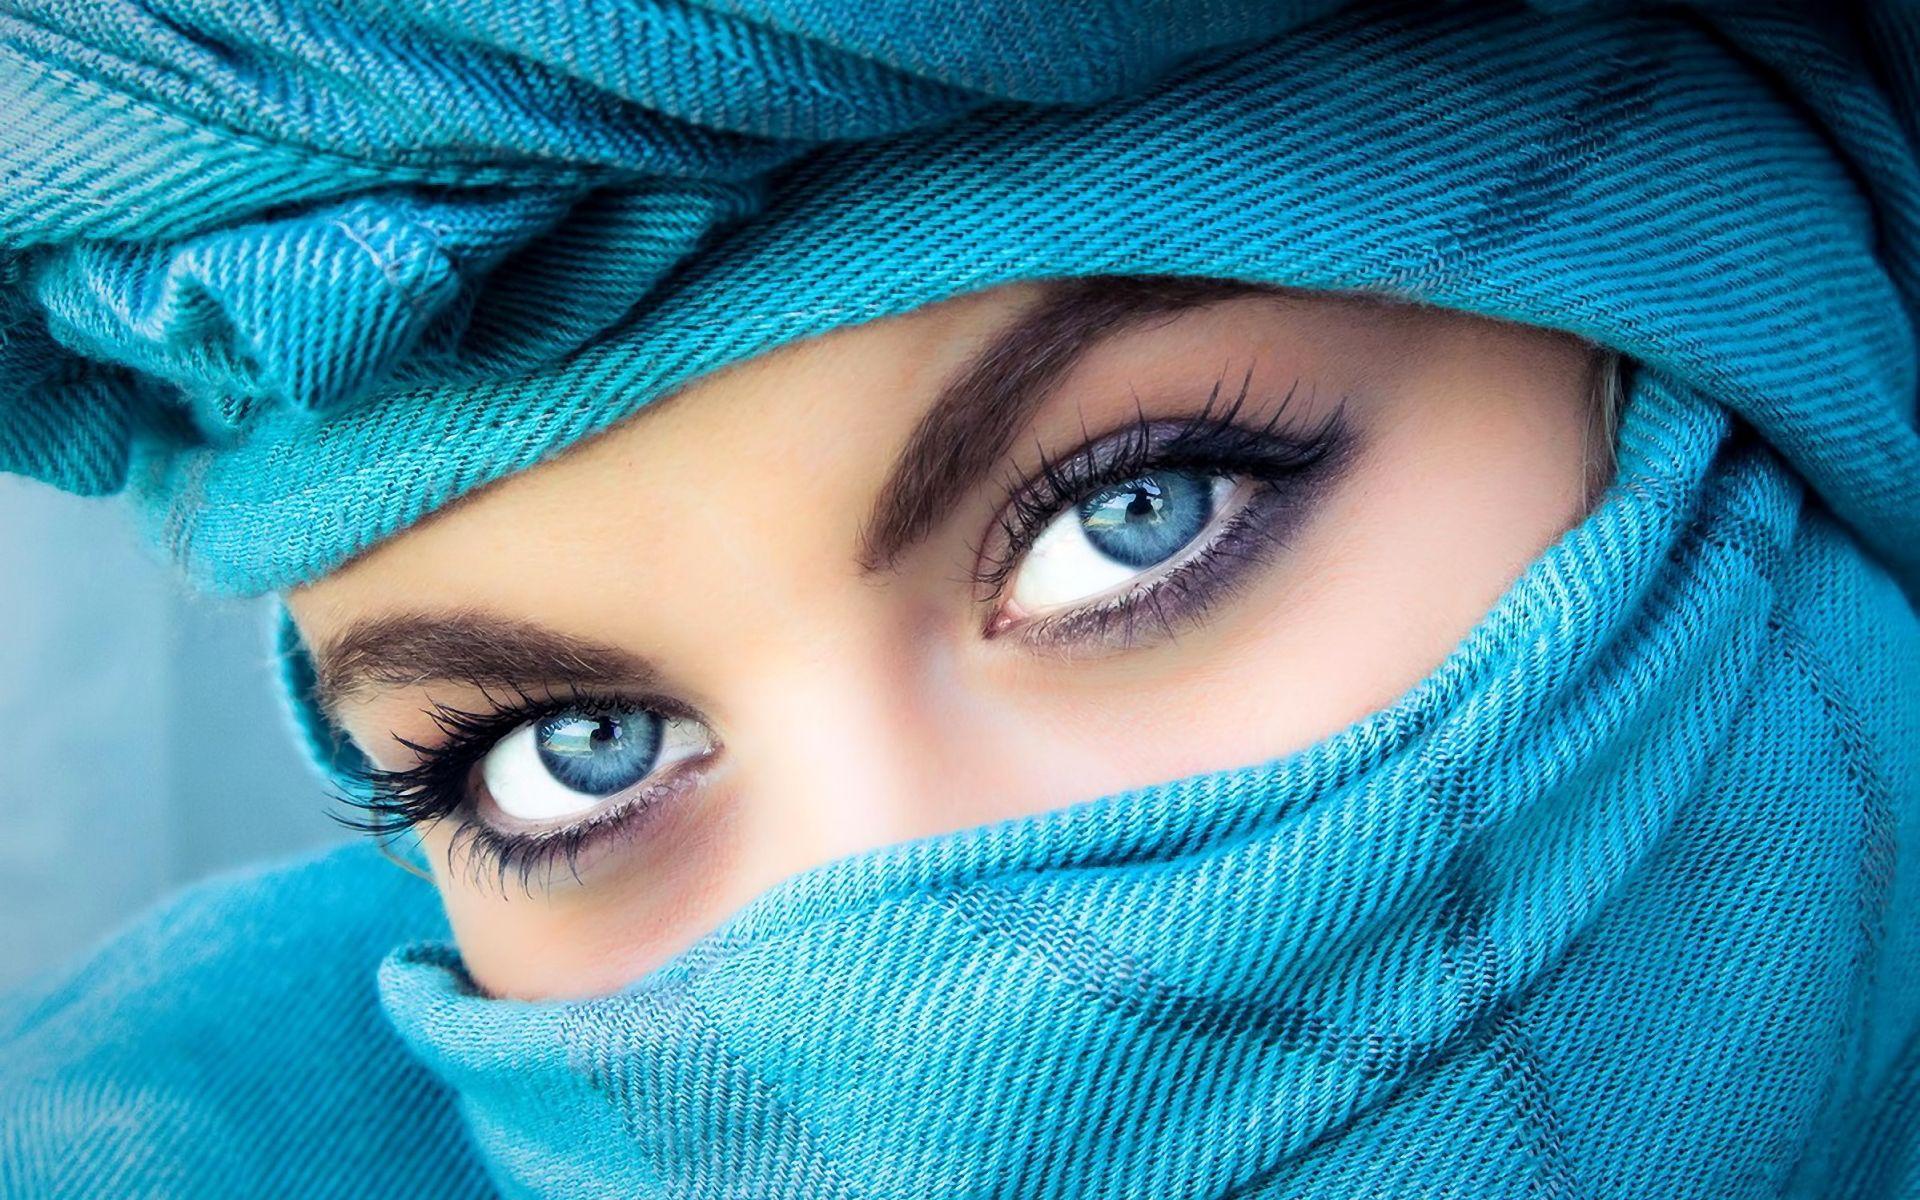 Beautiful Blue Eye Girl Image. Beautiful eyes image, Beautiful